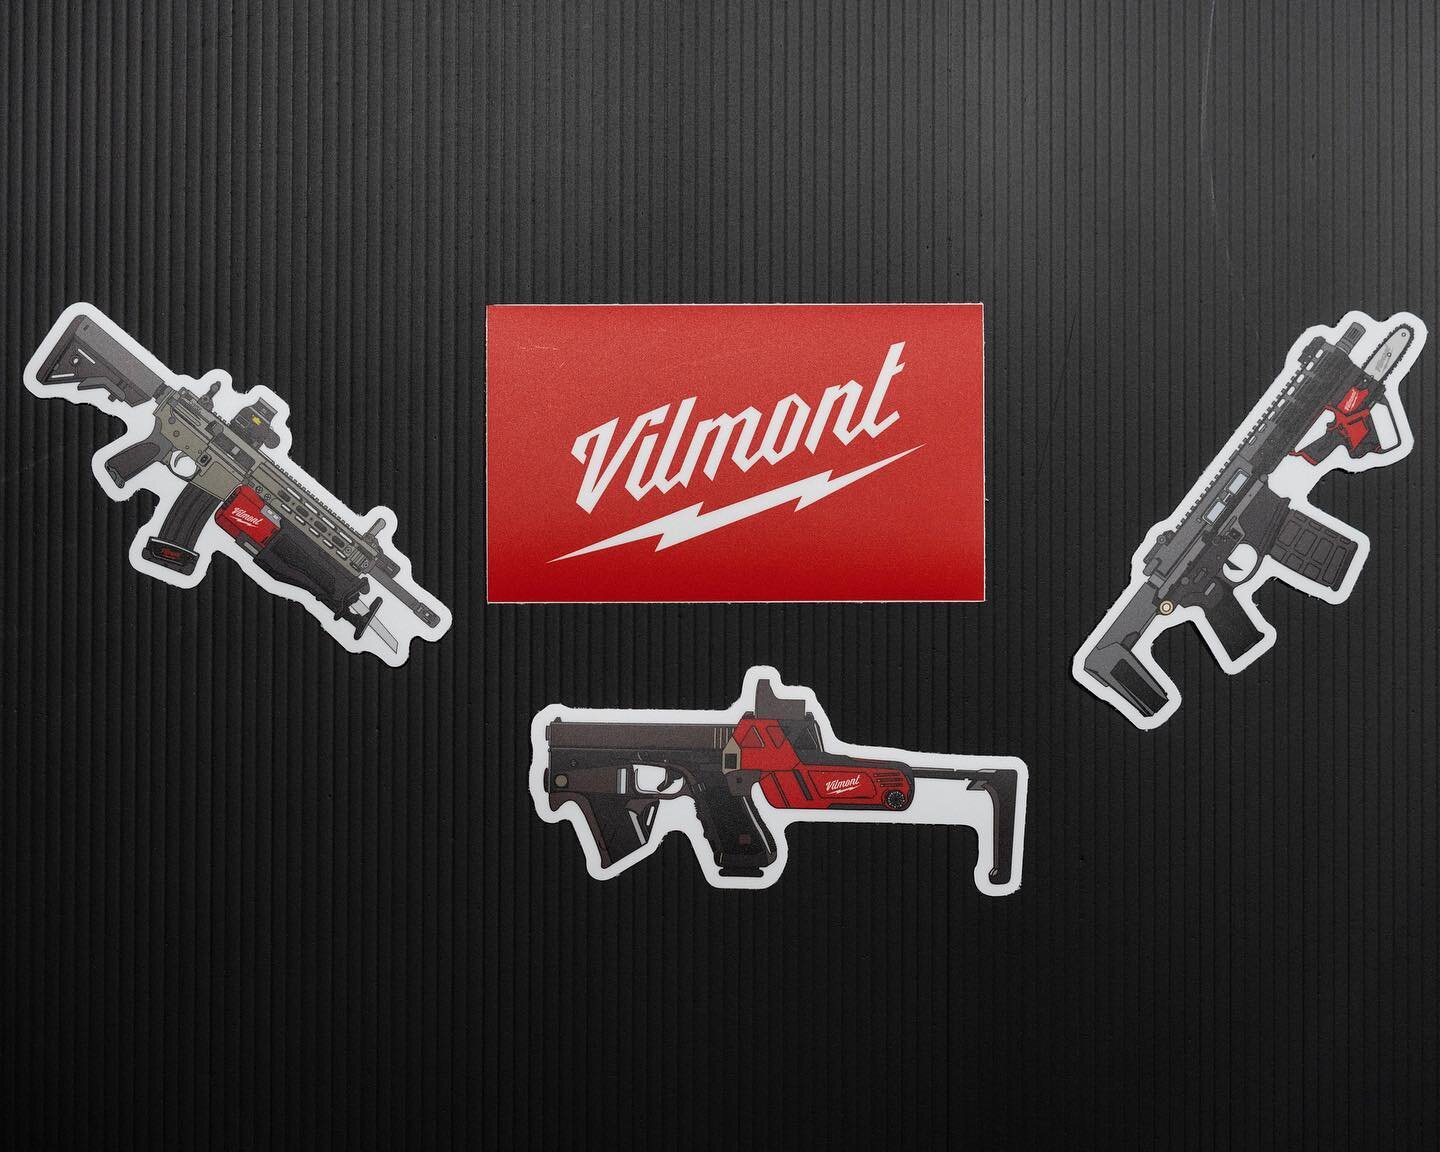 New Vilmont stickers out! Link in bio!
.
#glock19 #ghettoblaster #bravocompany #glock #glockporn #vilmonthq